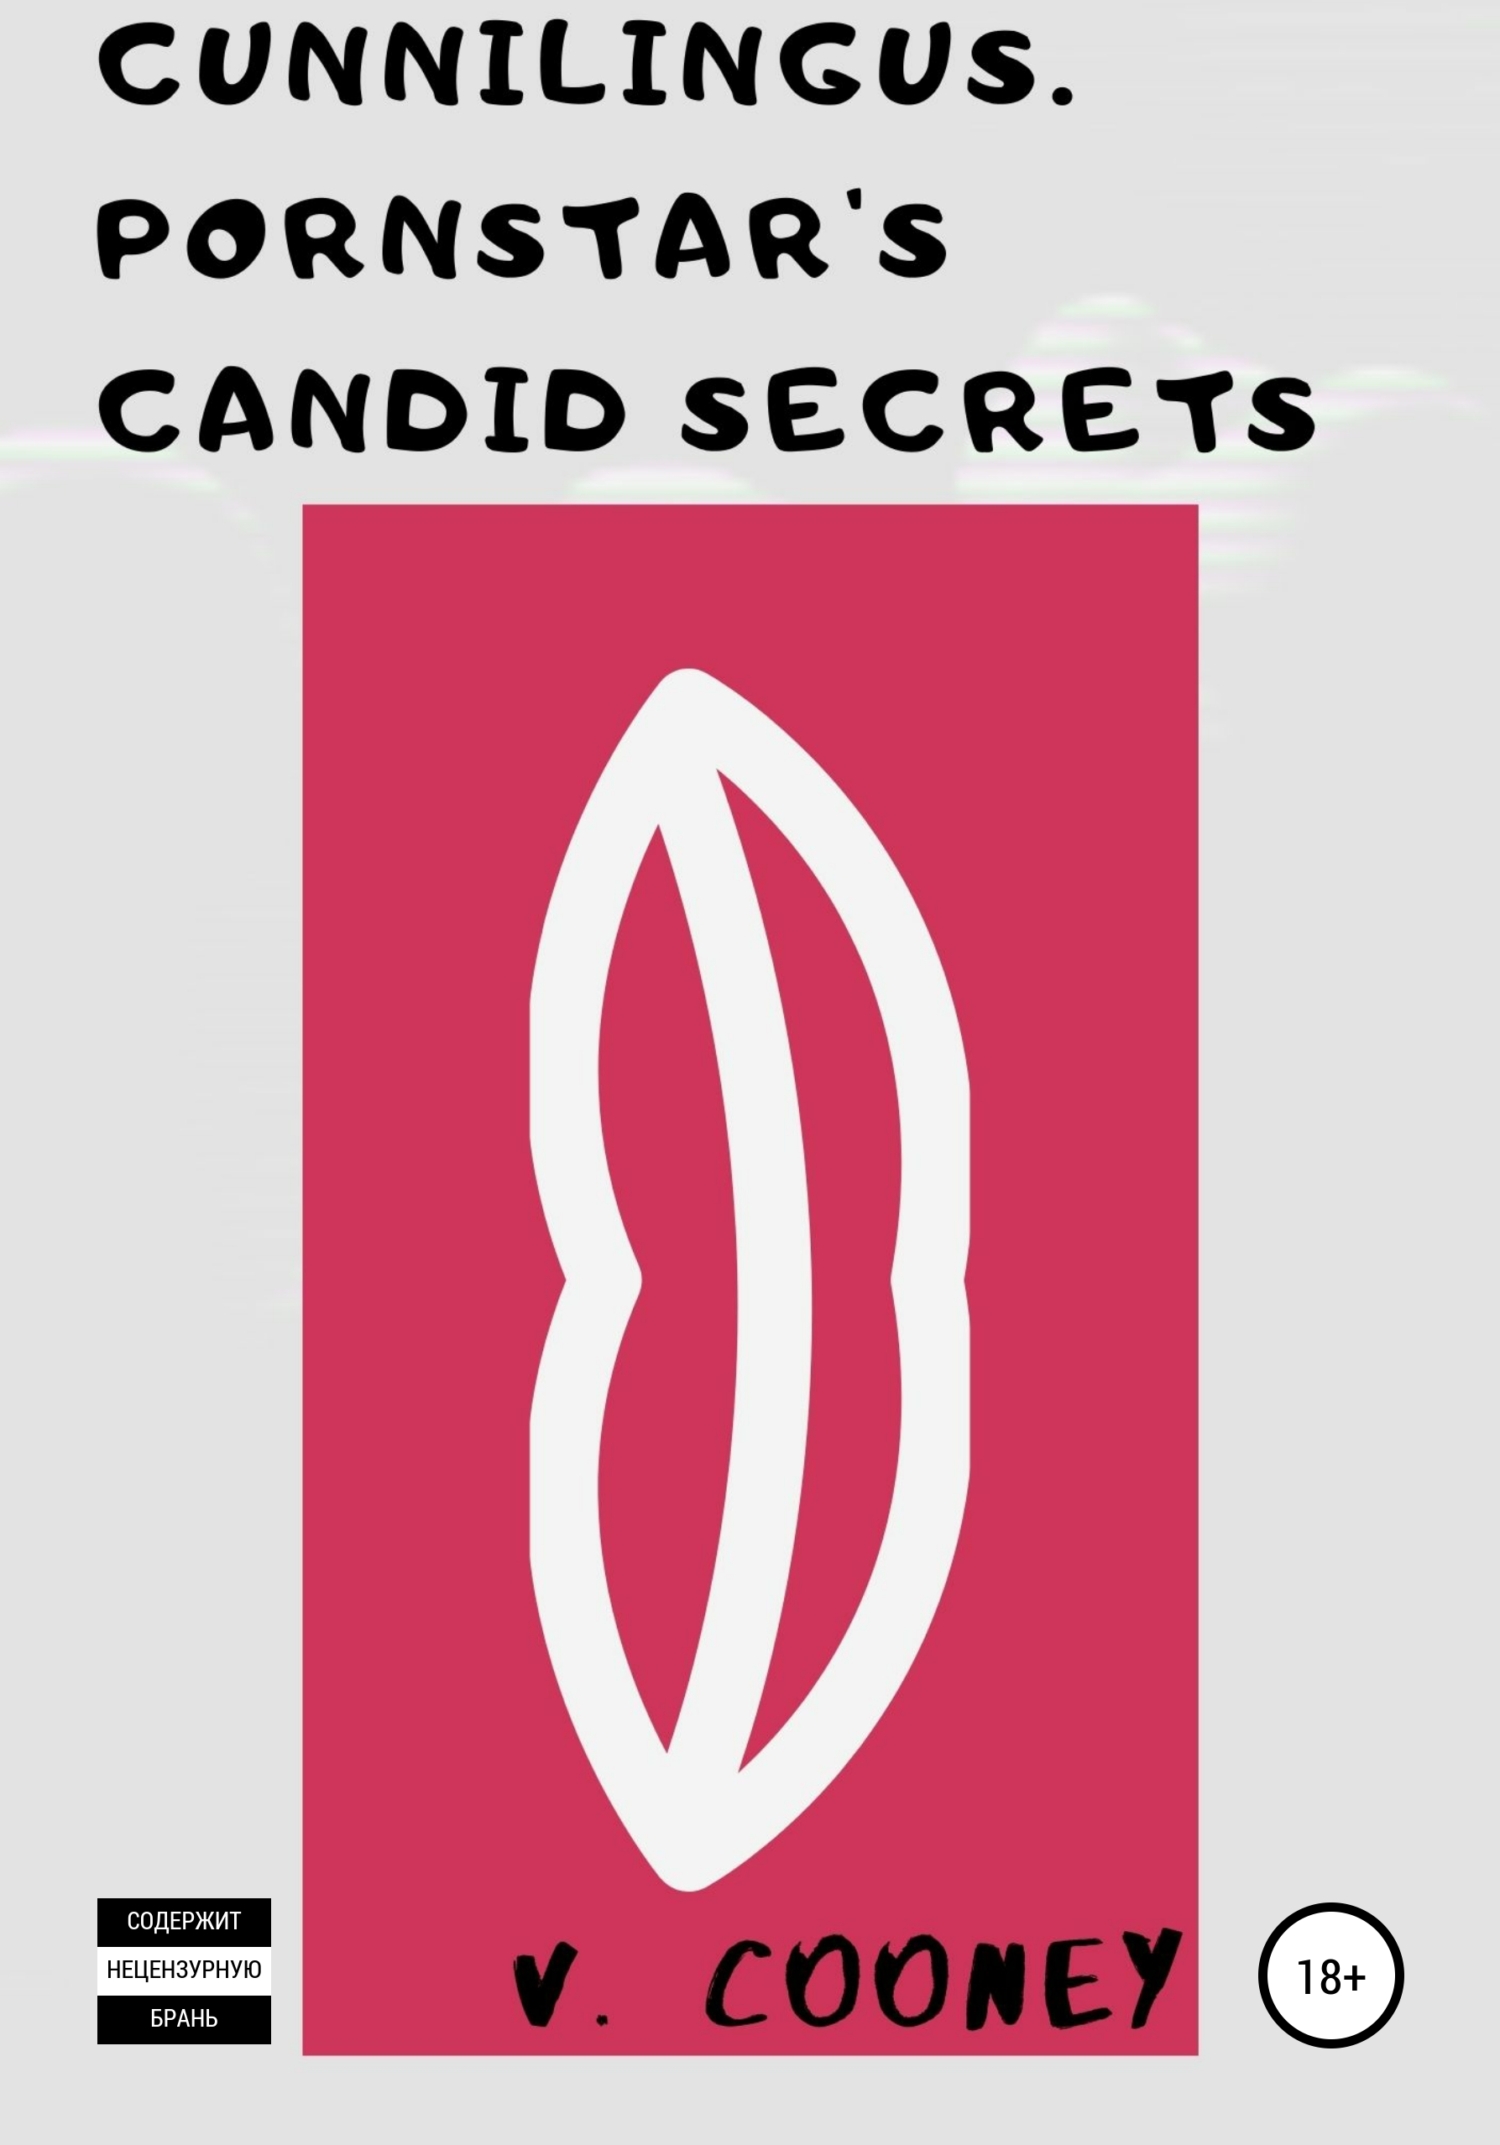 Cunnilingus. Pornstar’s Candid Secrets – V. Cooney